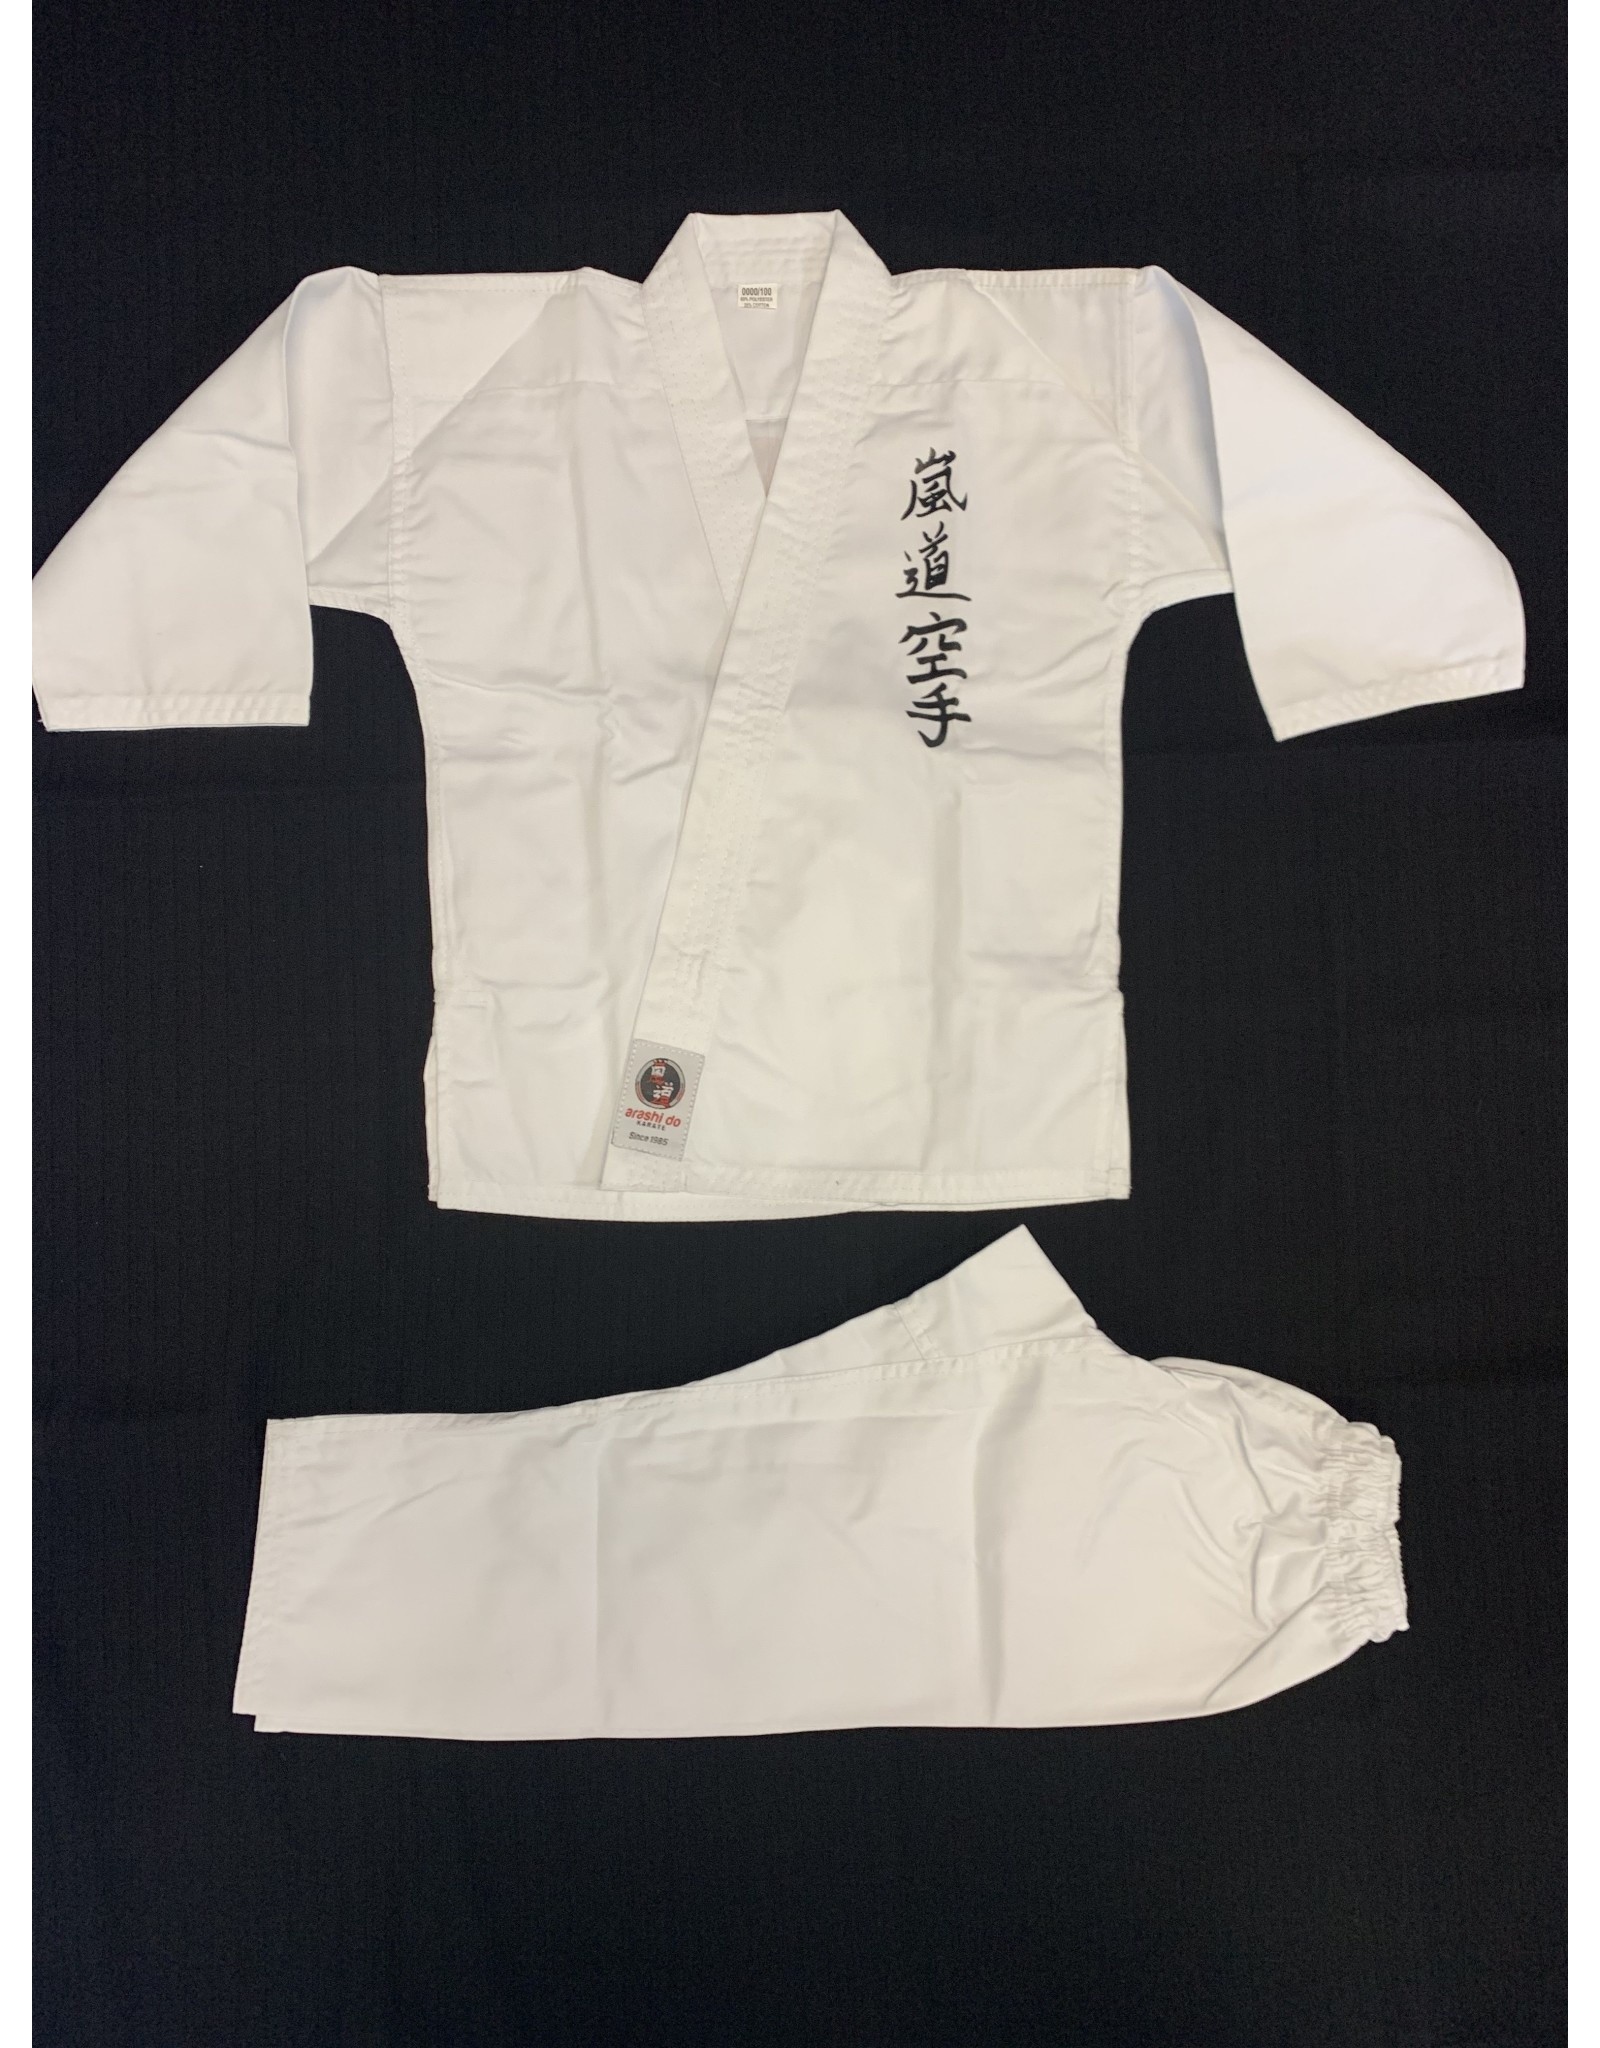 ADMA Karate Uniforms - Lightweight